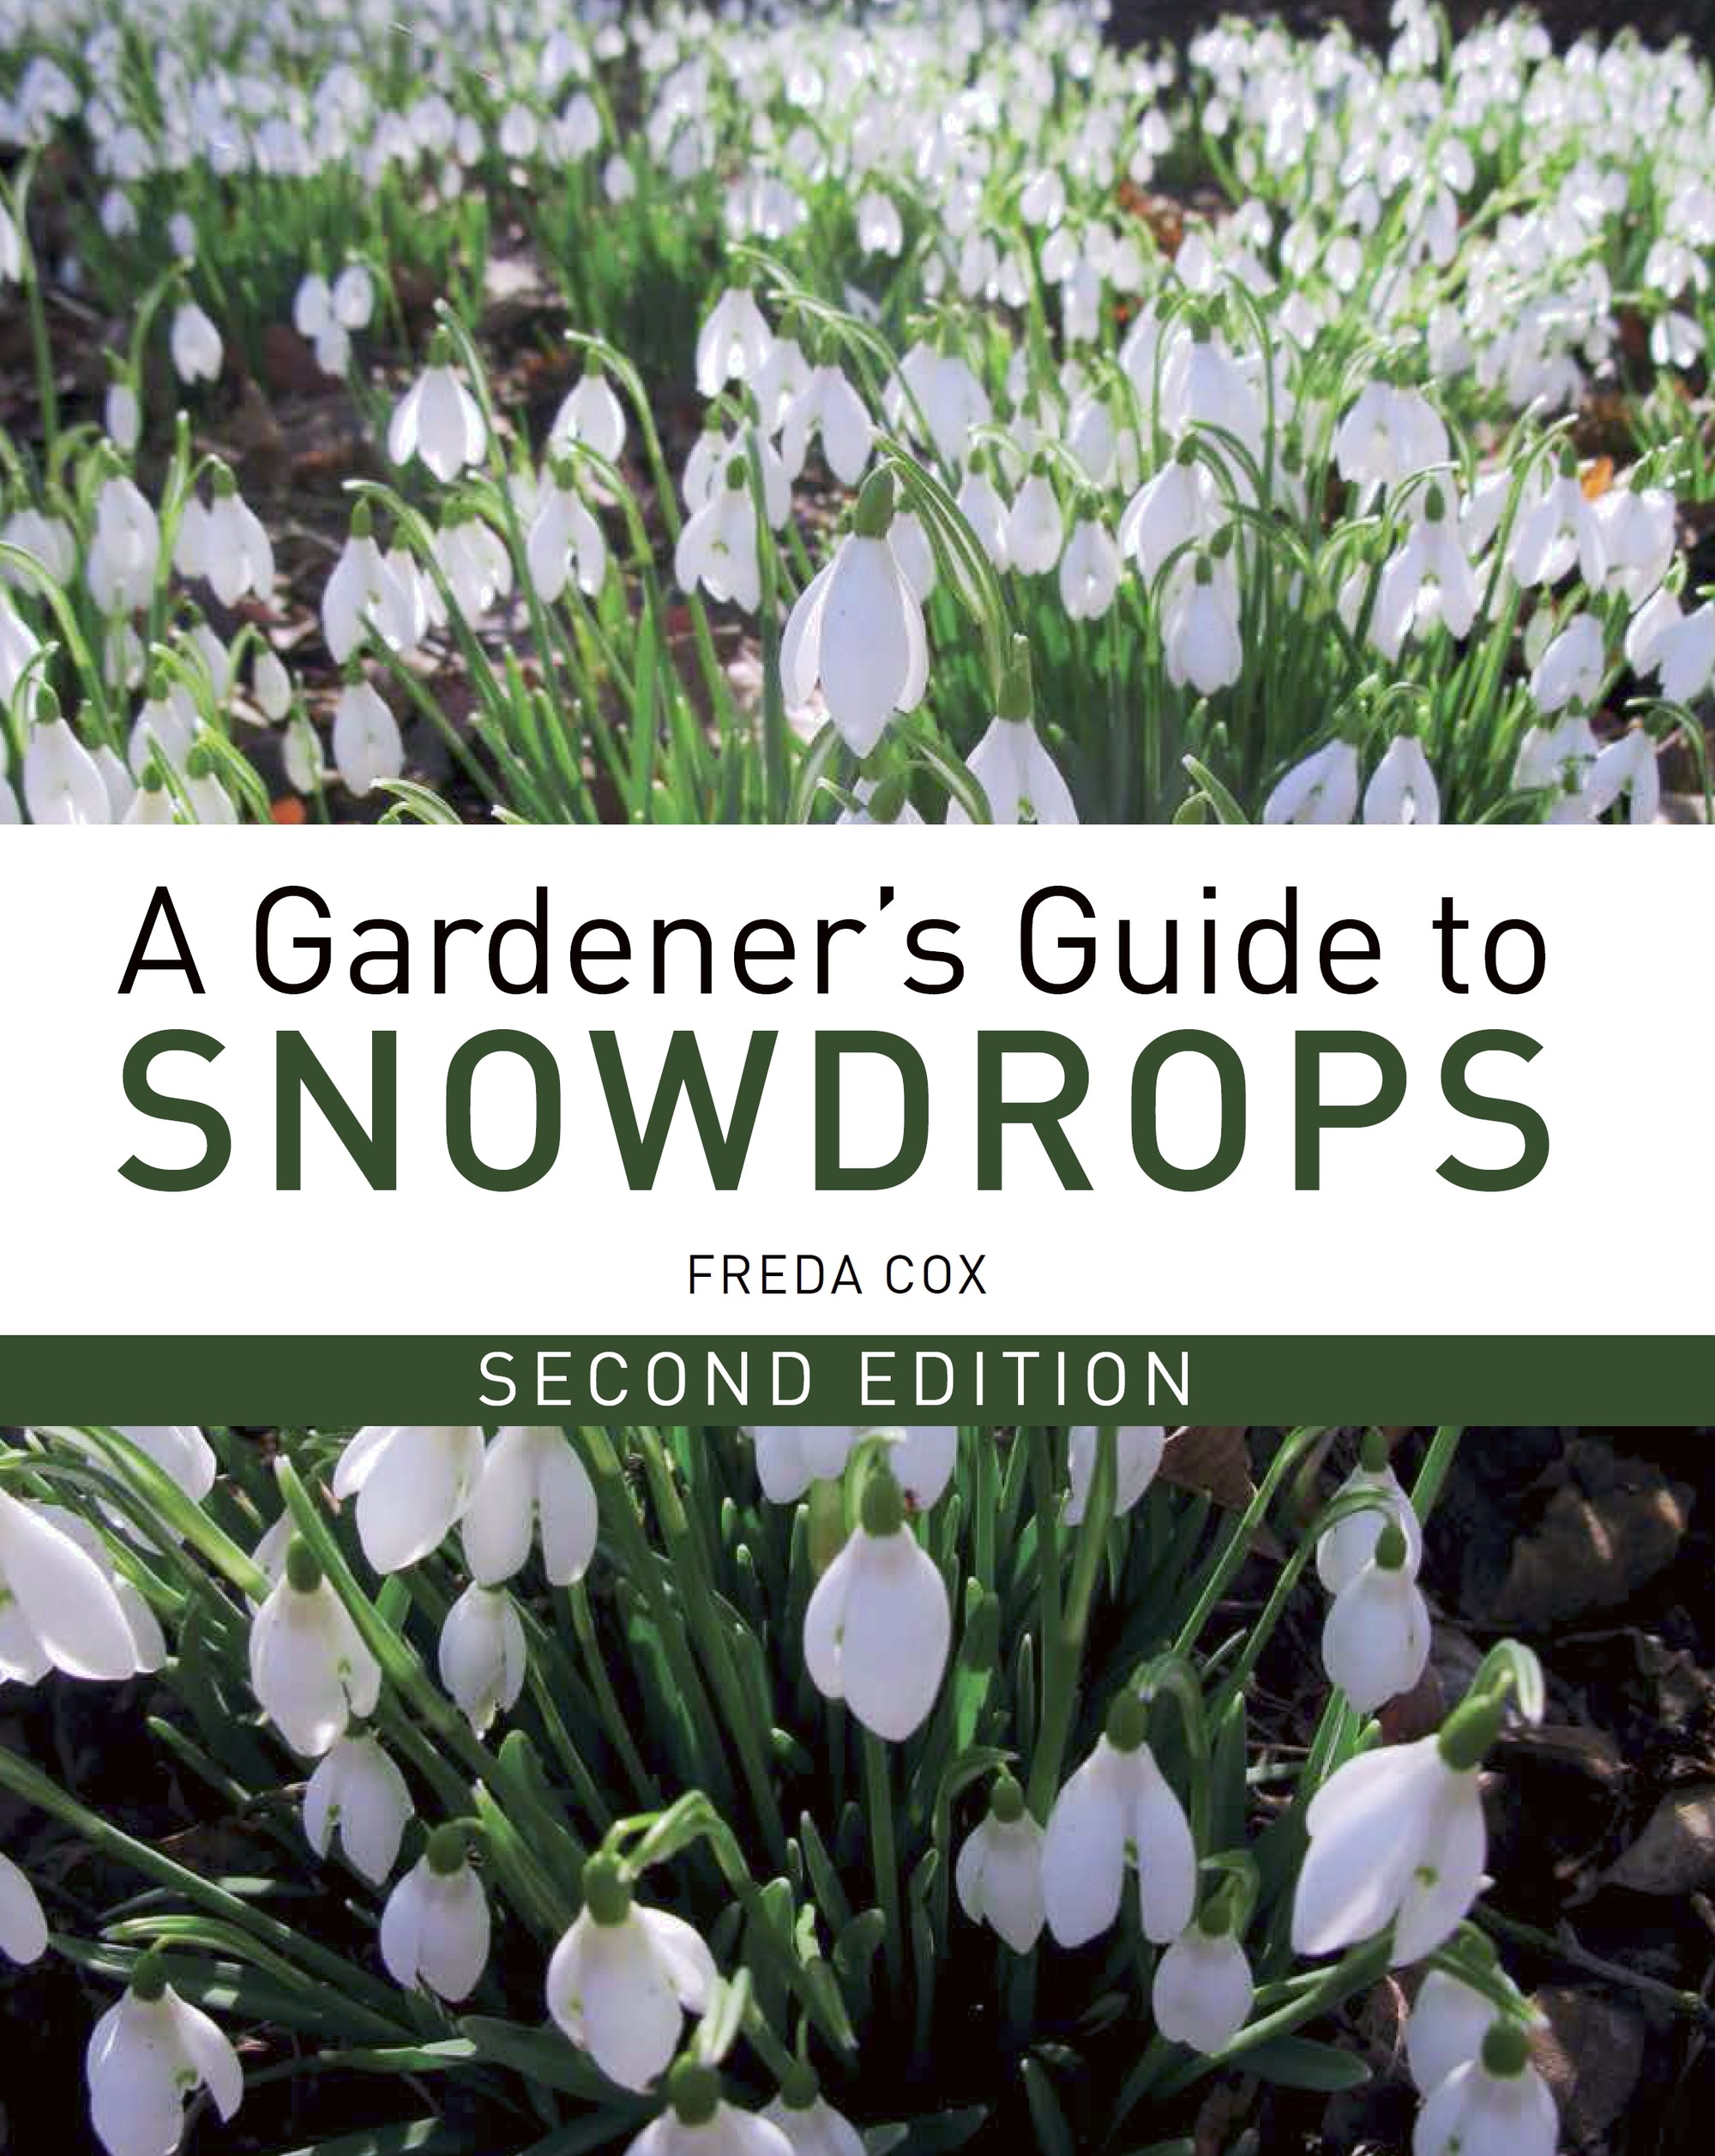 A Gardener's Guide to Snowdrops